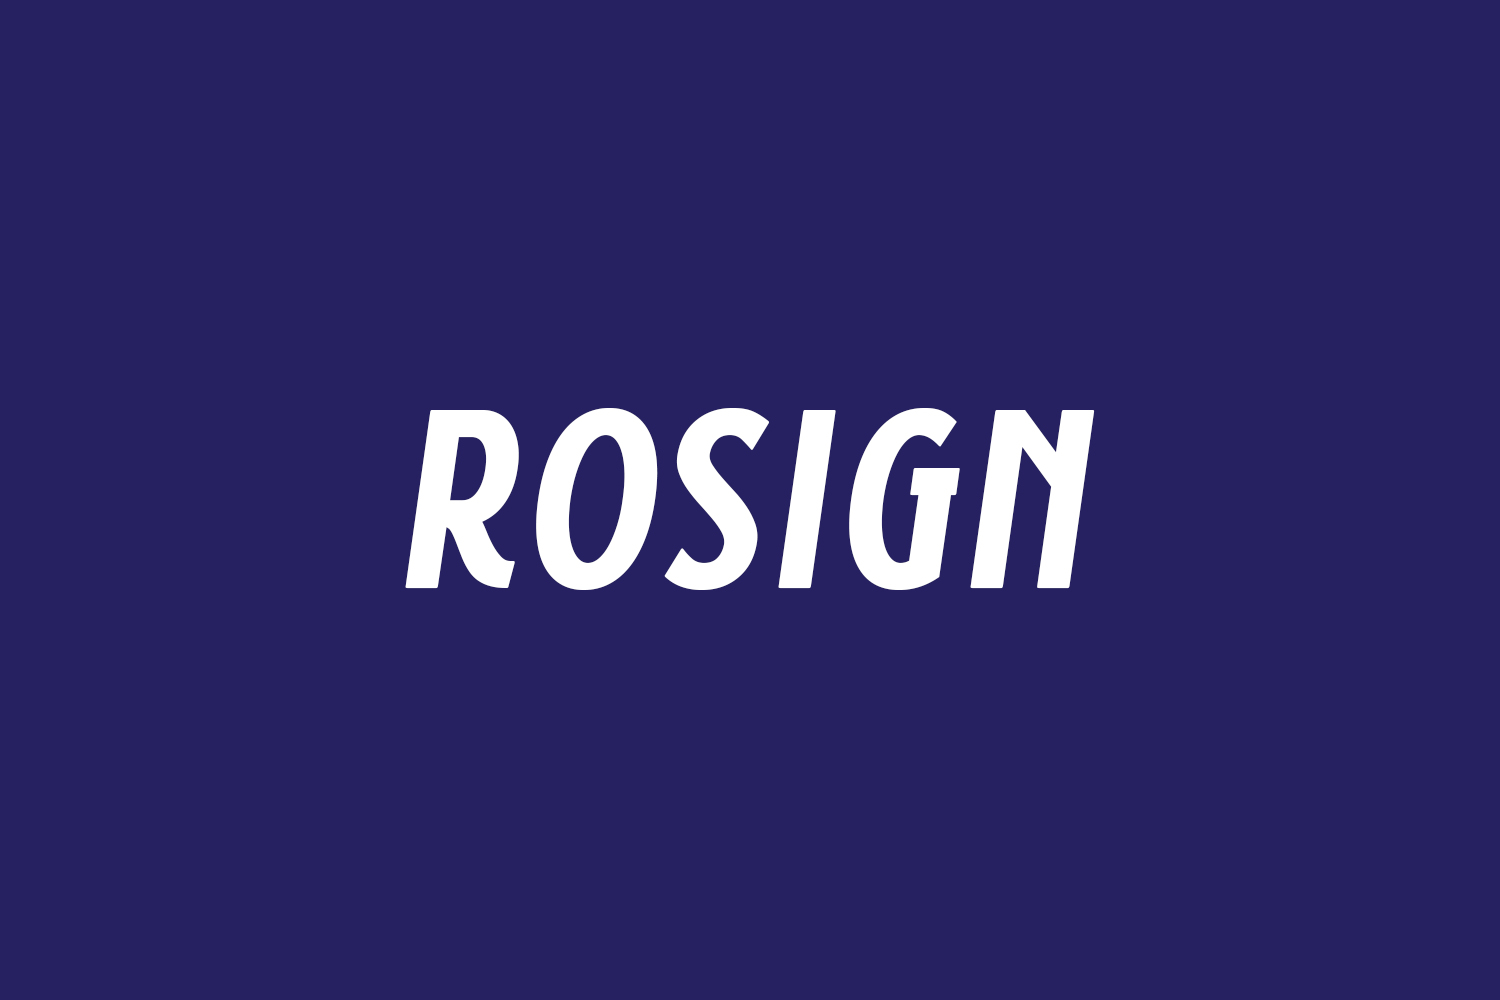 Rosign Free Font